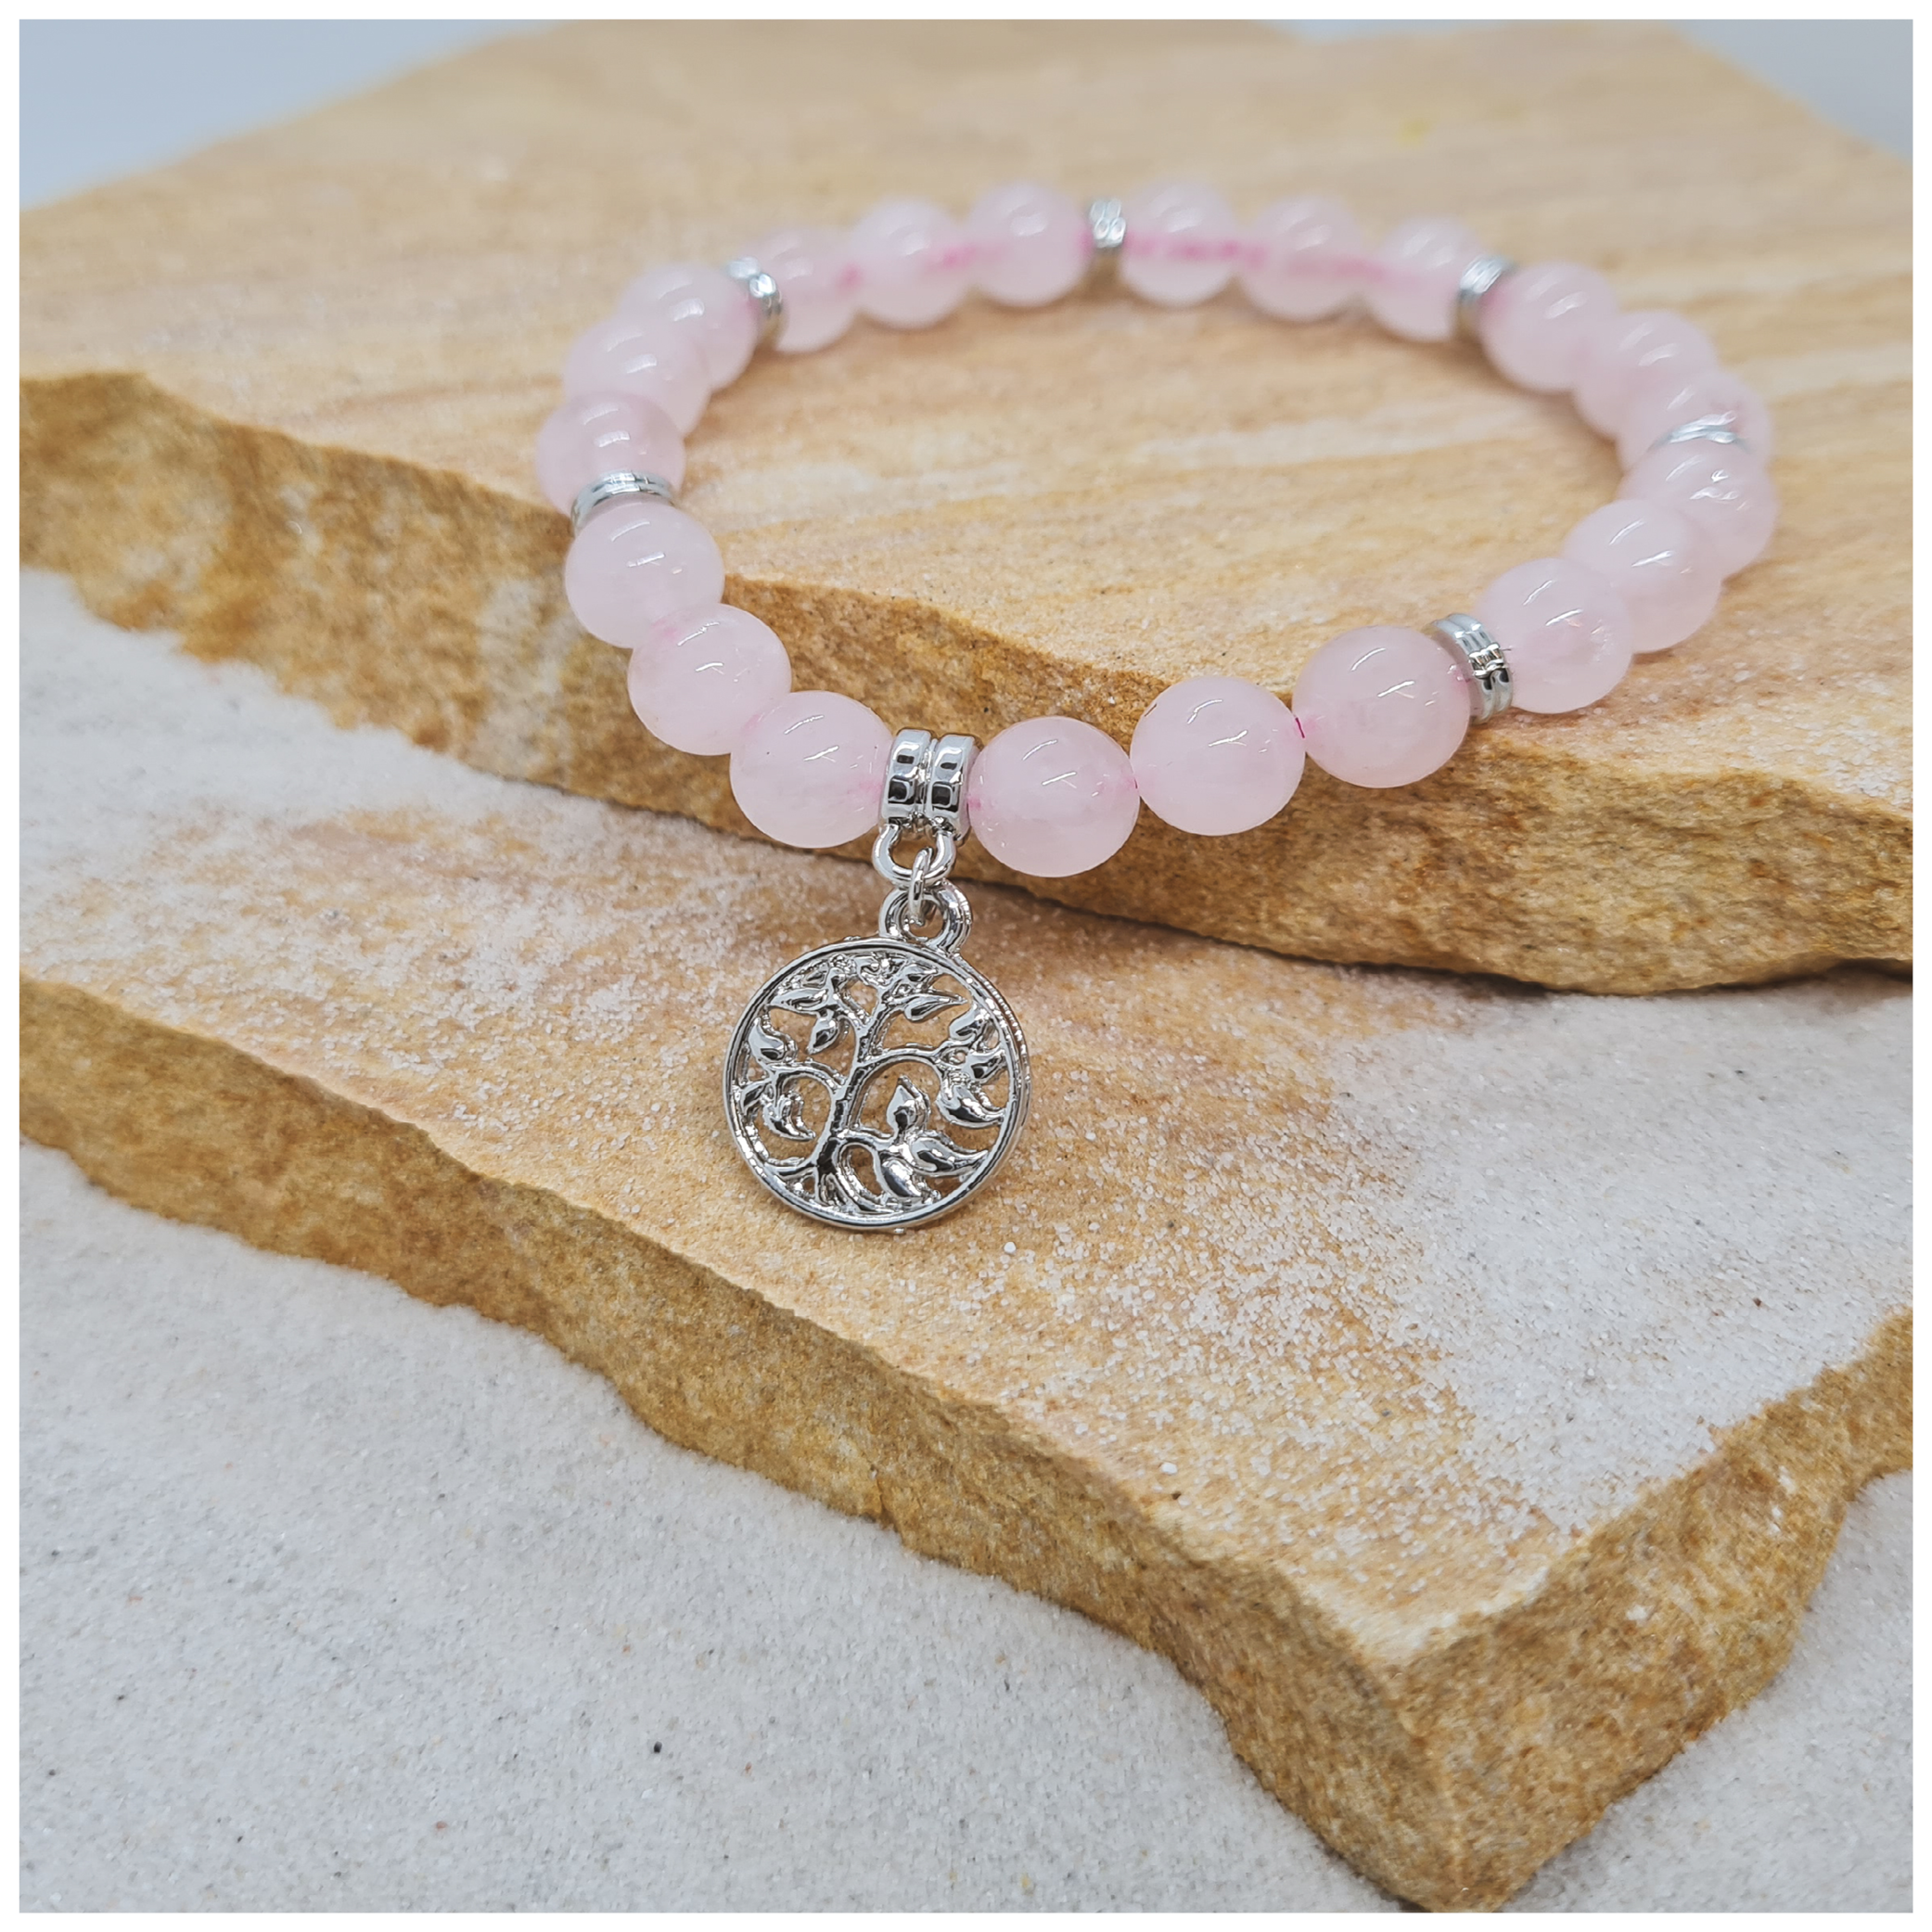 Rose Quartz 6mm crystal bead bracelet with rose gold Tree of Life charm